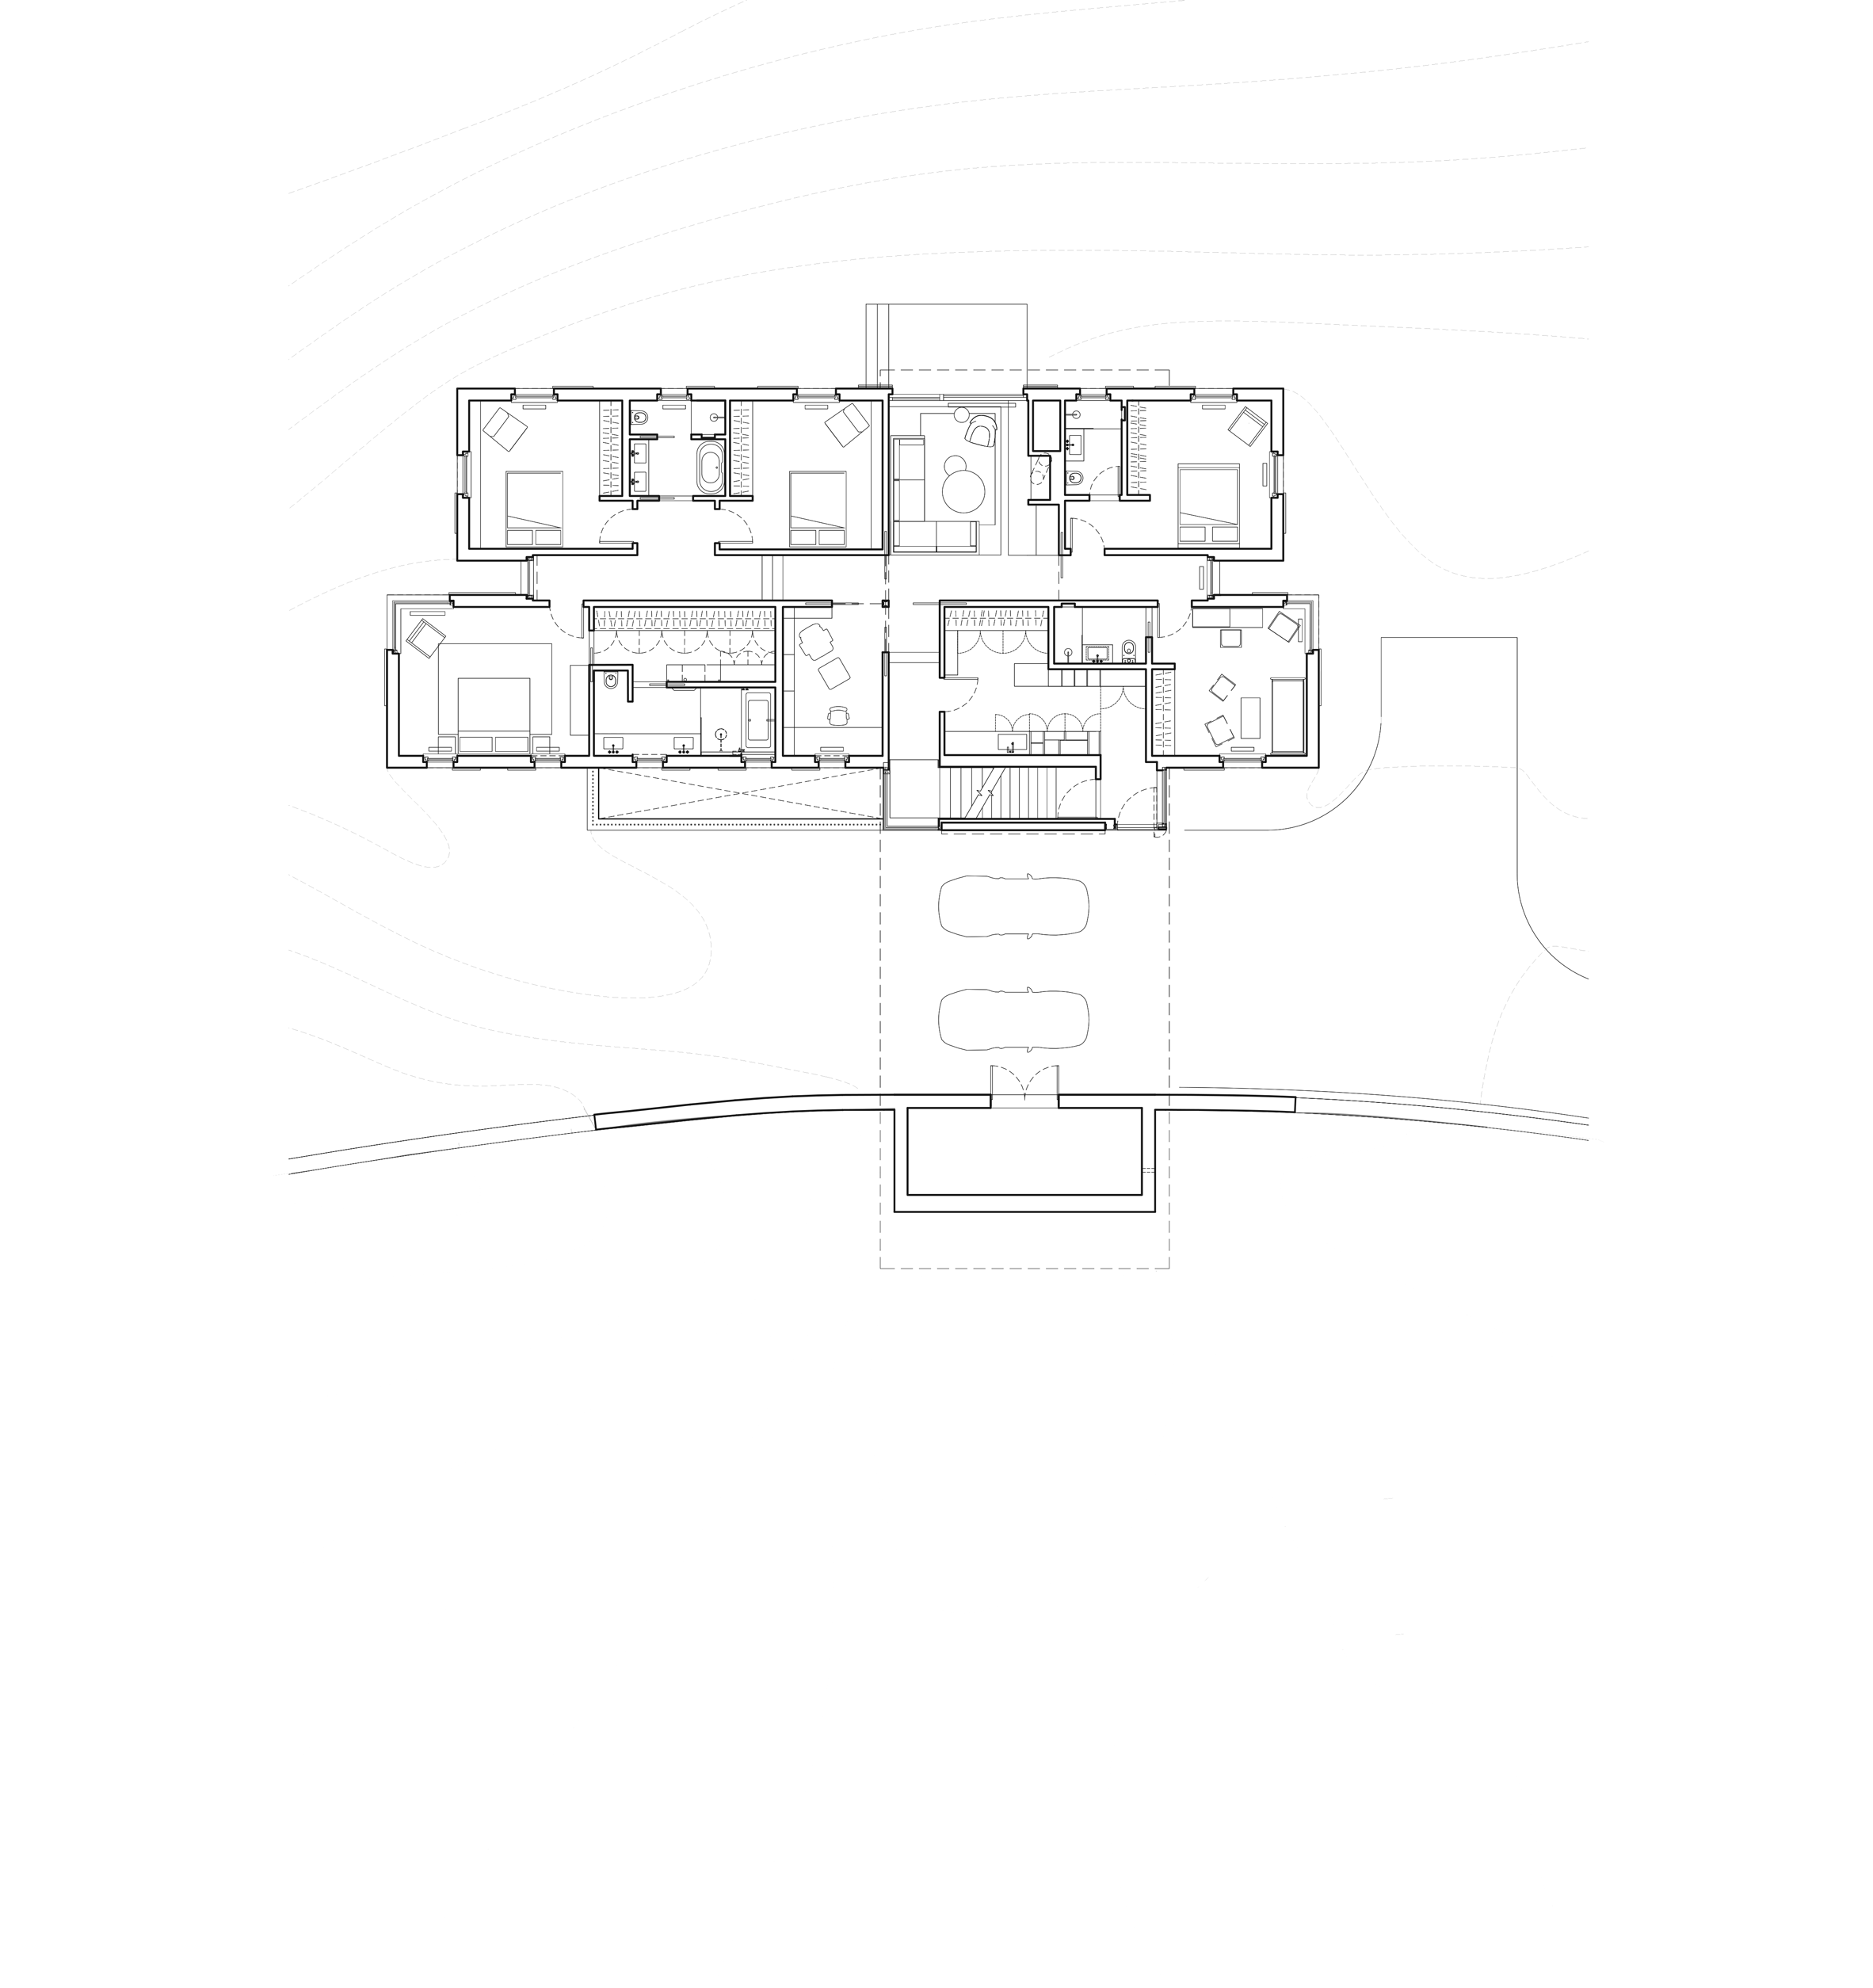 link-farm-house-slade-architecture-dutchess-country-new-york-us_dezeen_lower-floor-plan.jpg